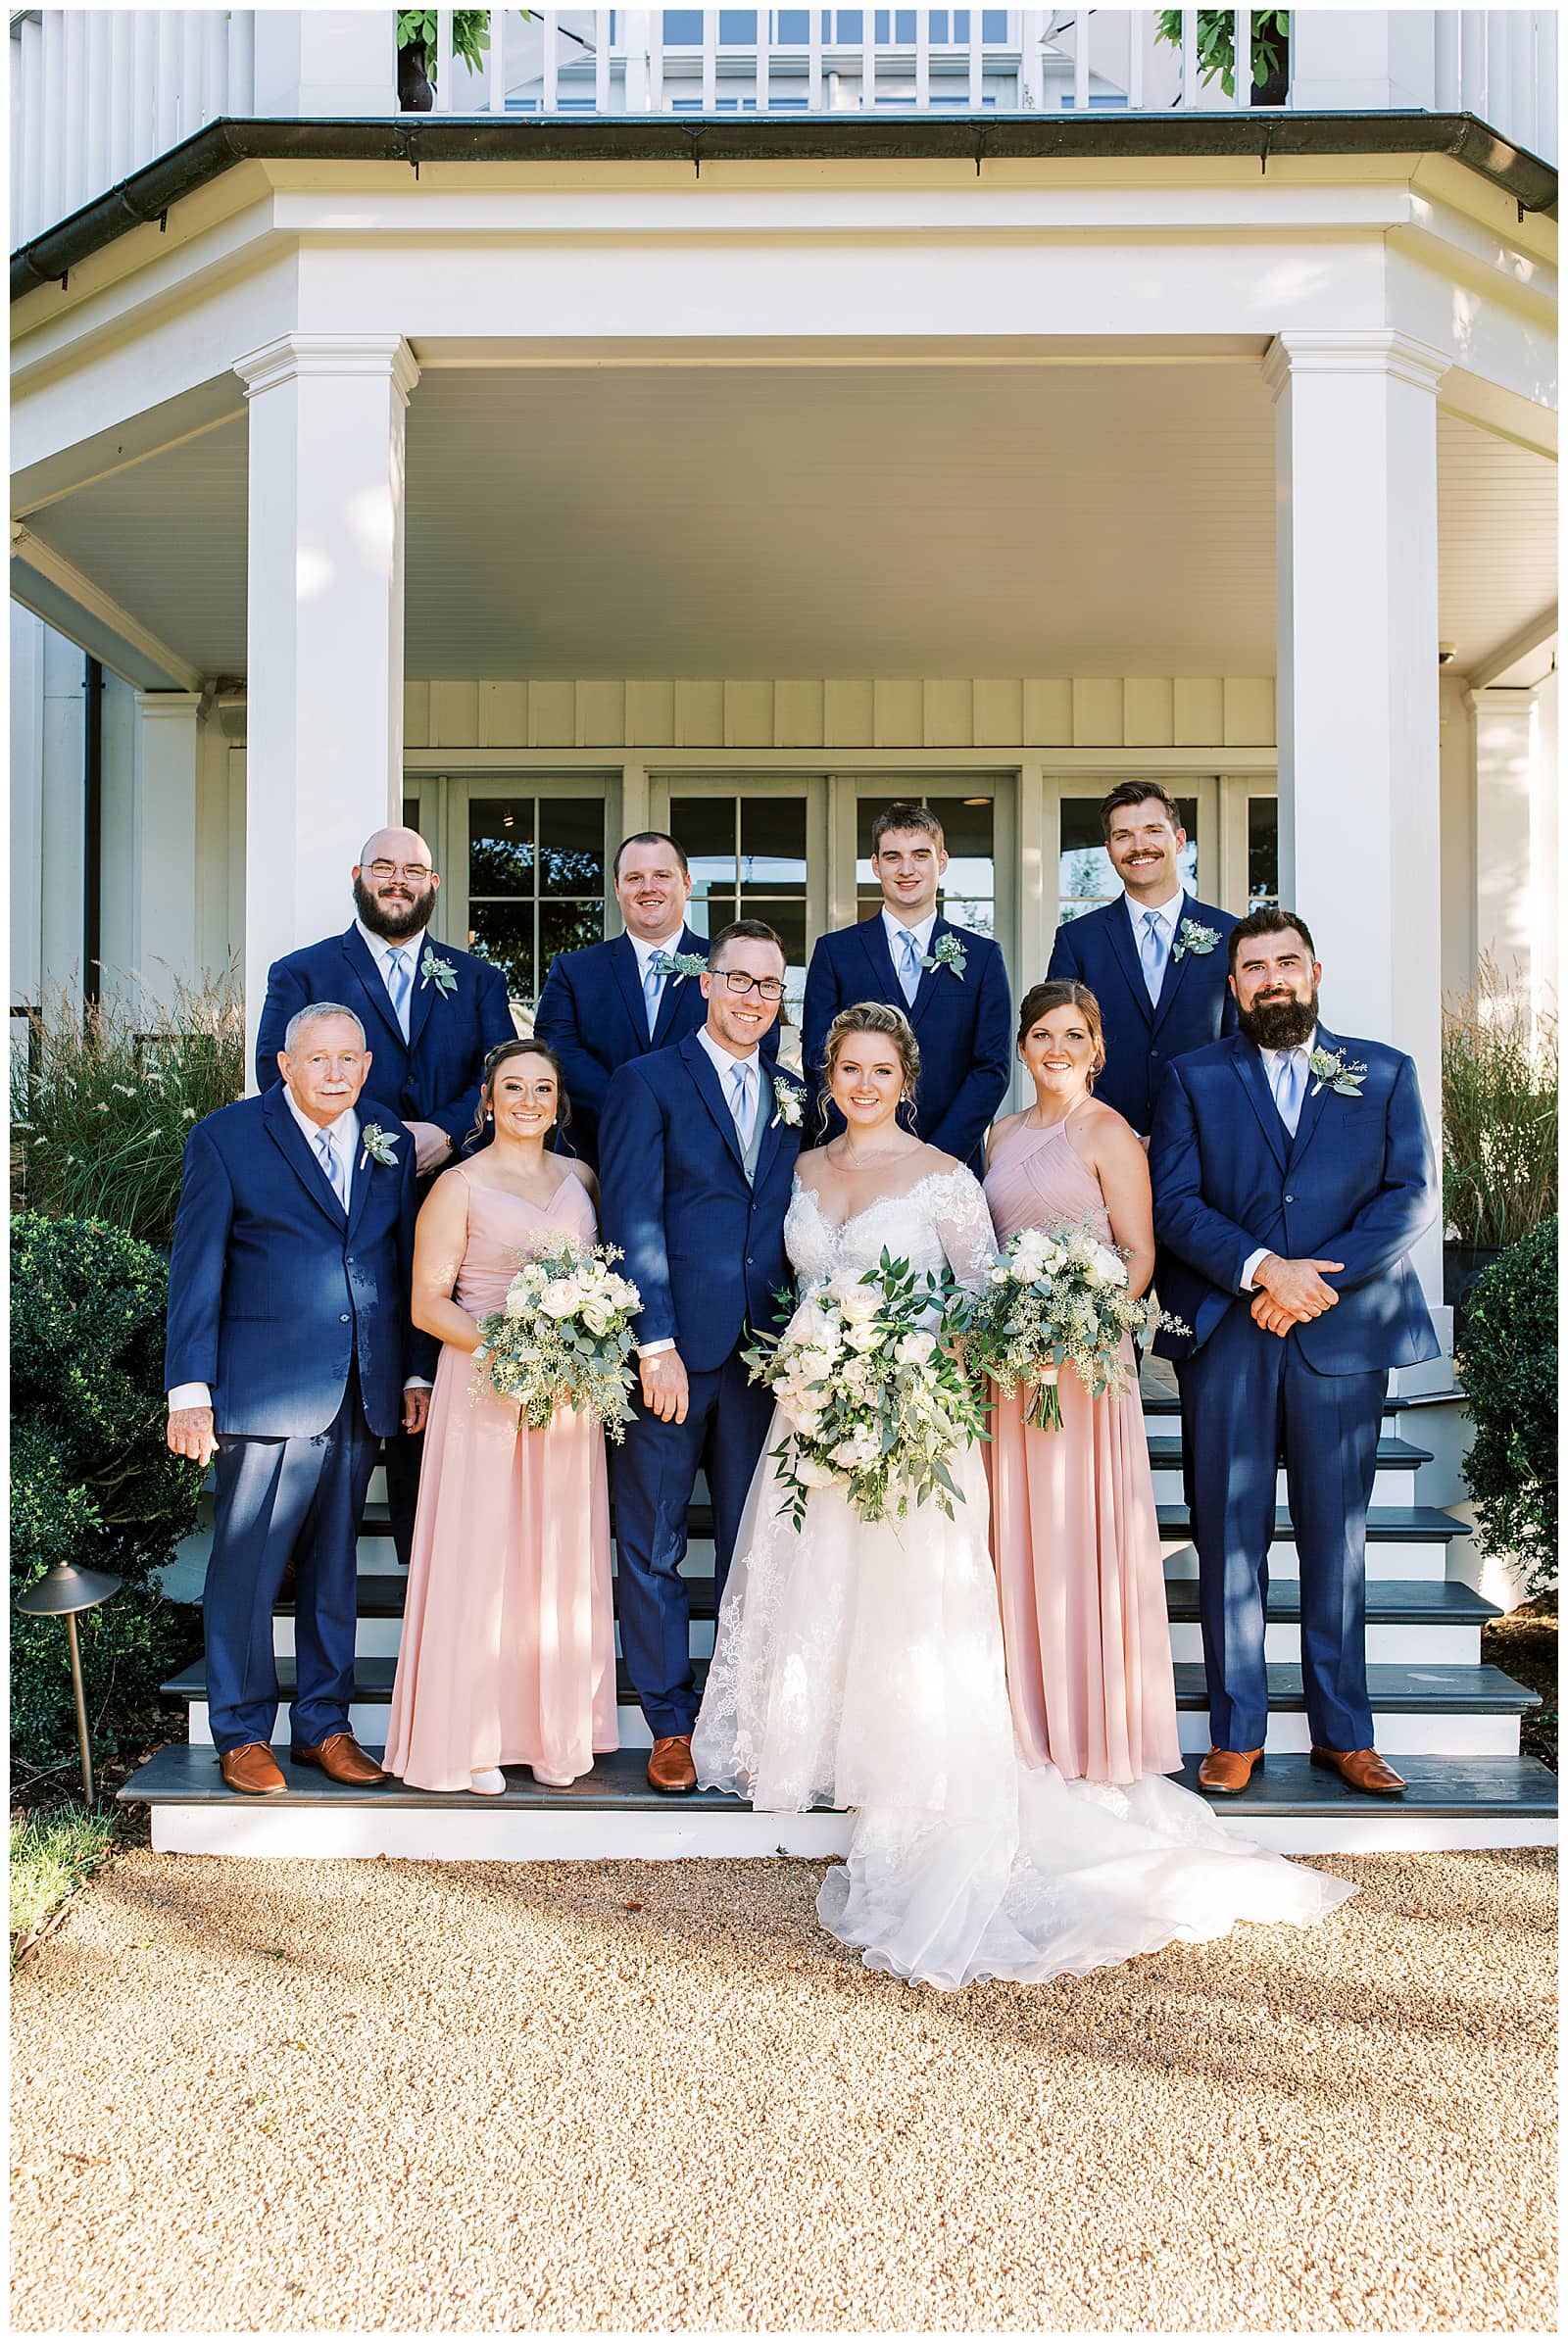 Danielle-Defayette-Photography-Castle-Hill-Cider-Charlottesville-Wedding-2020_0042.jpg